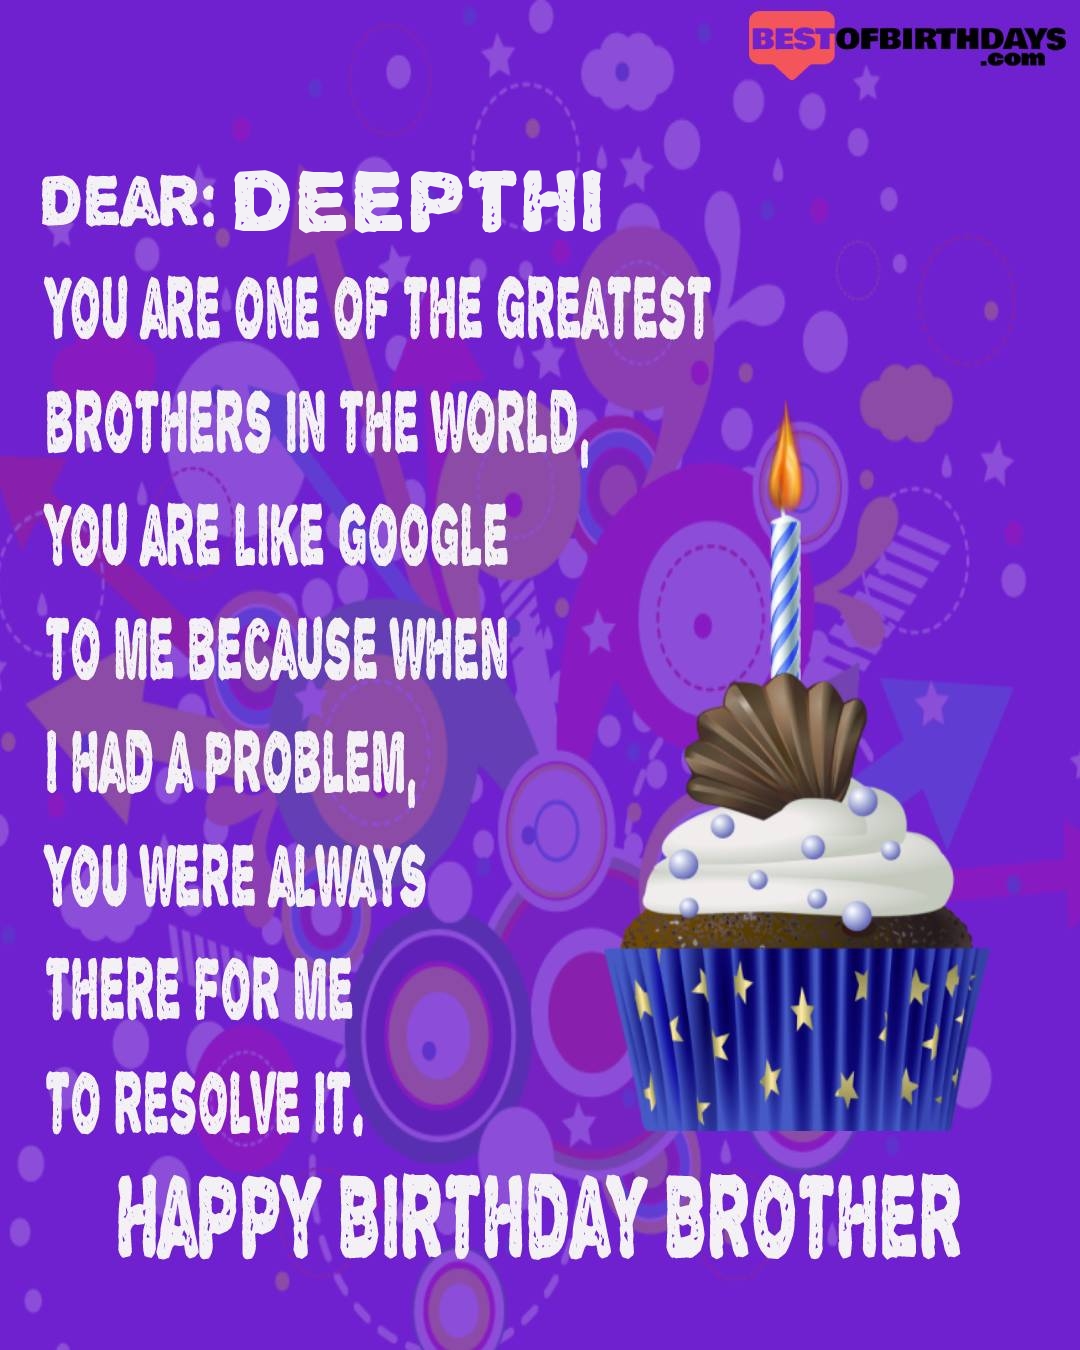 Happy birthday deepthi bhai brother bro